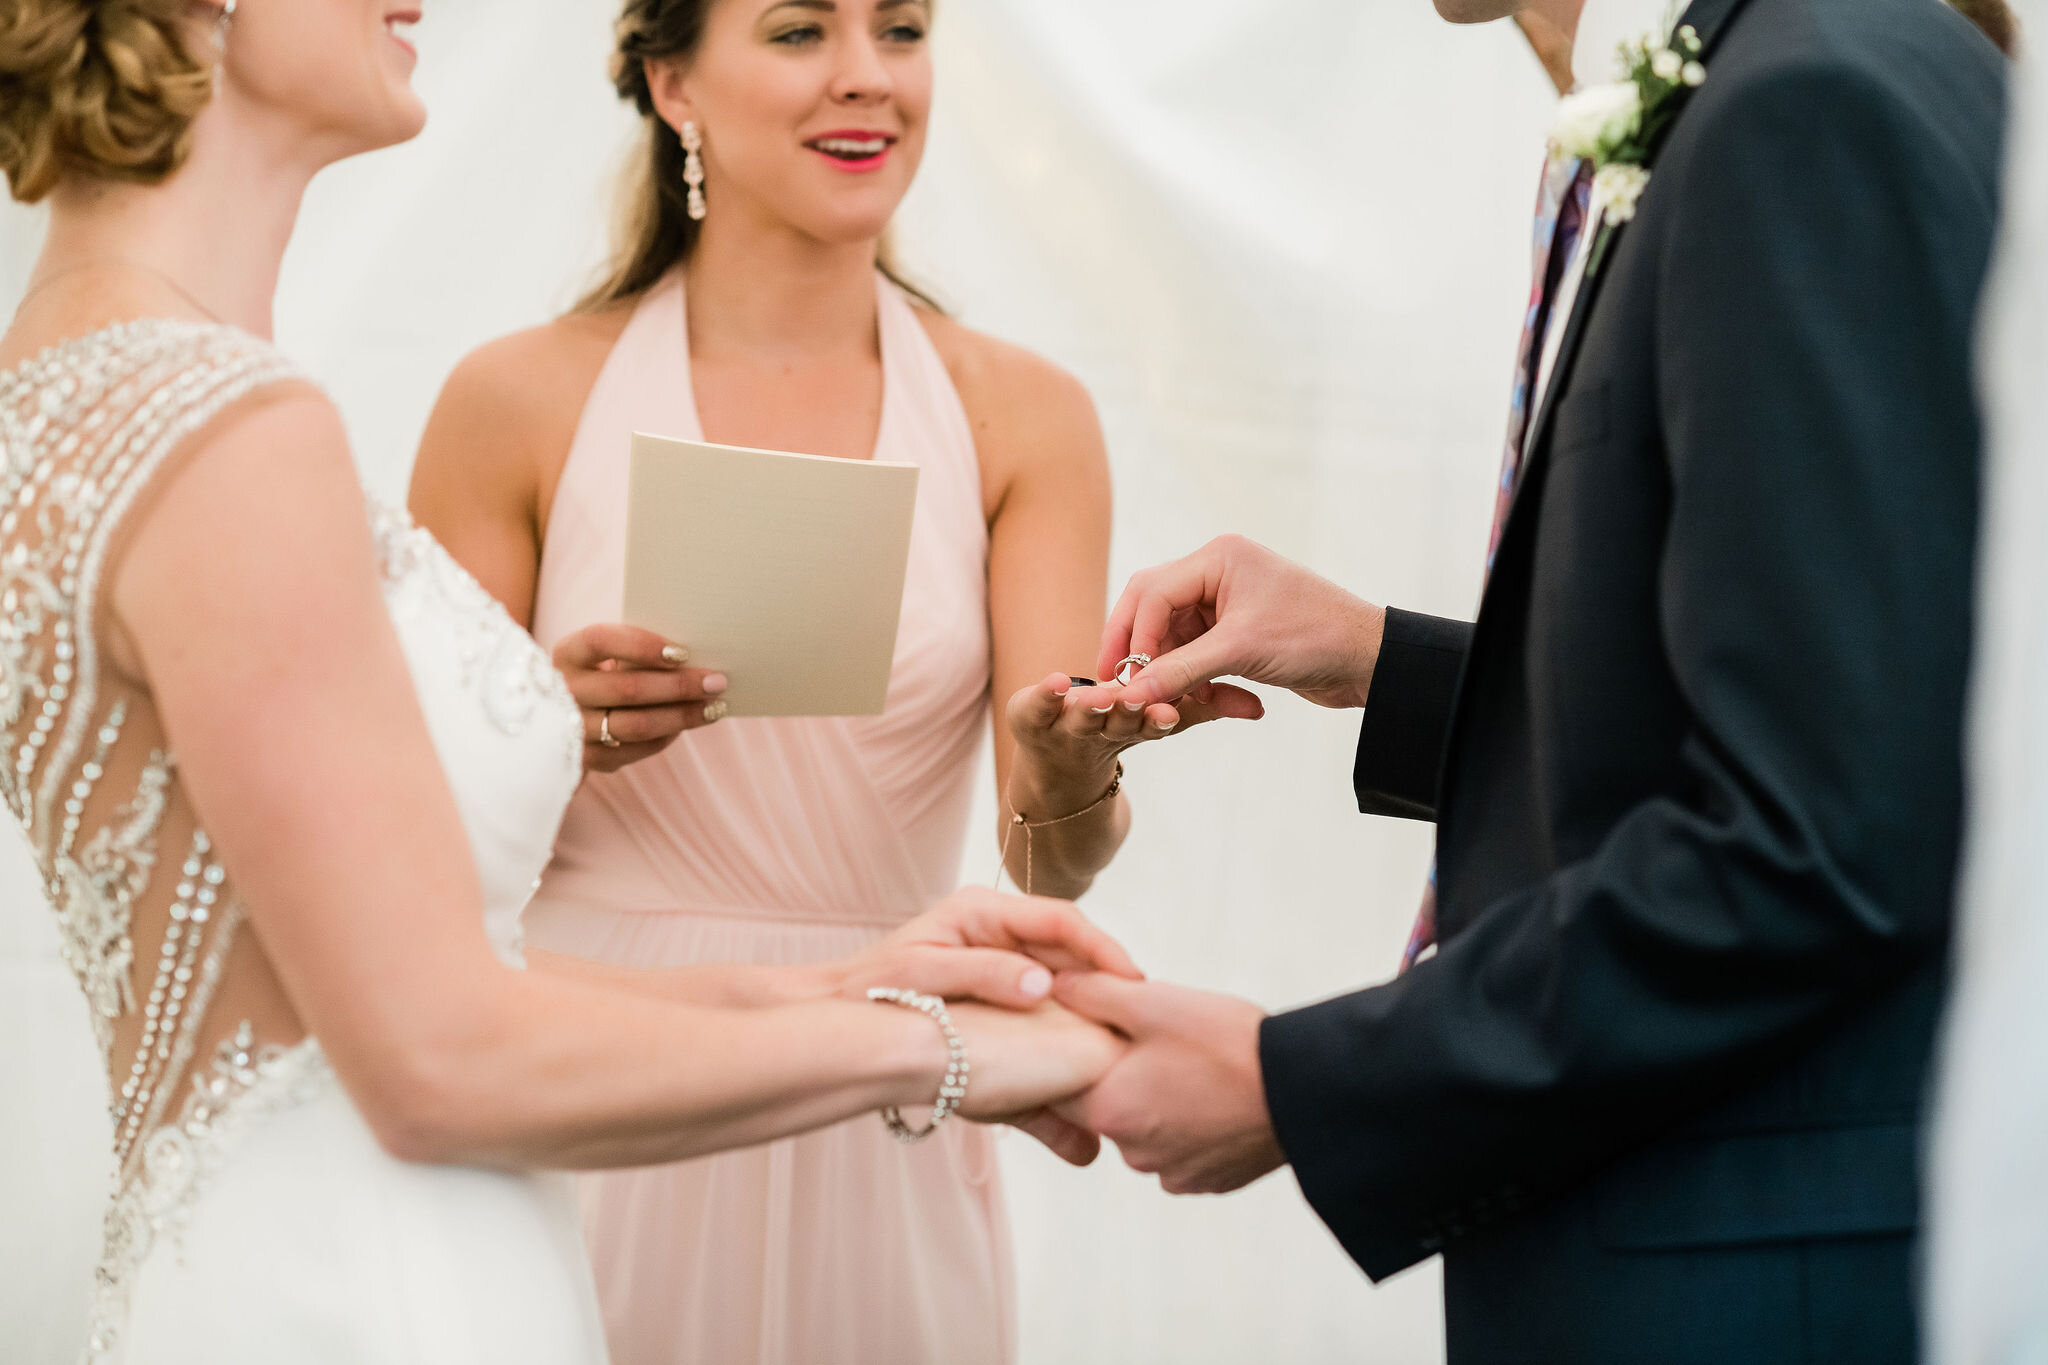 Officiant handing groom the wedding rings